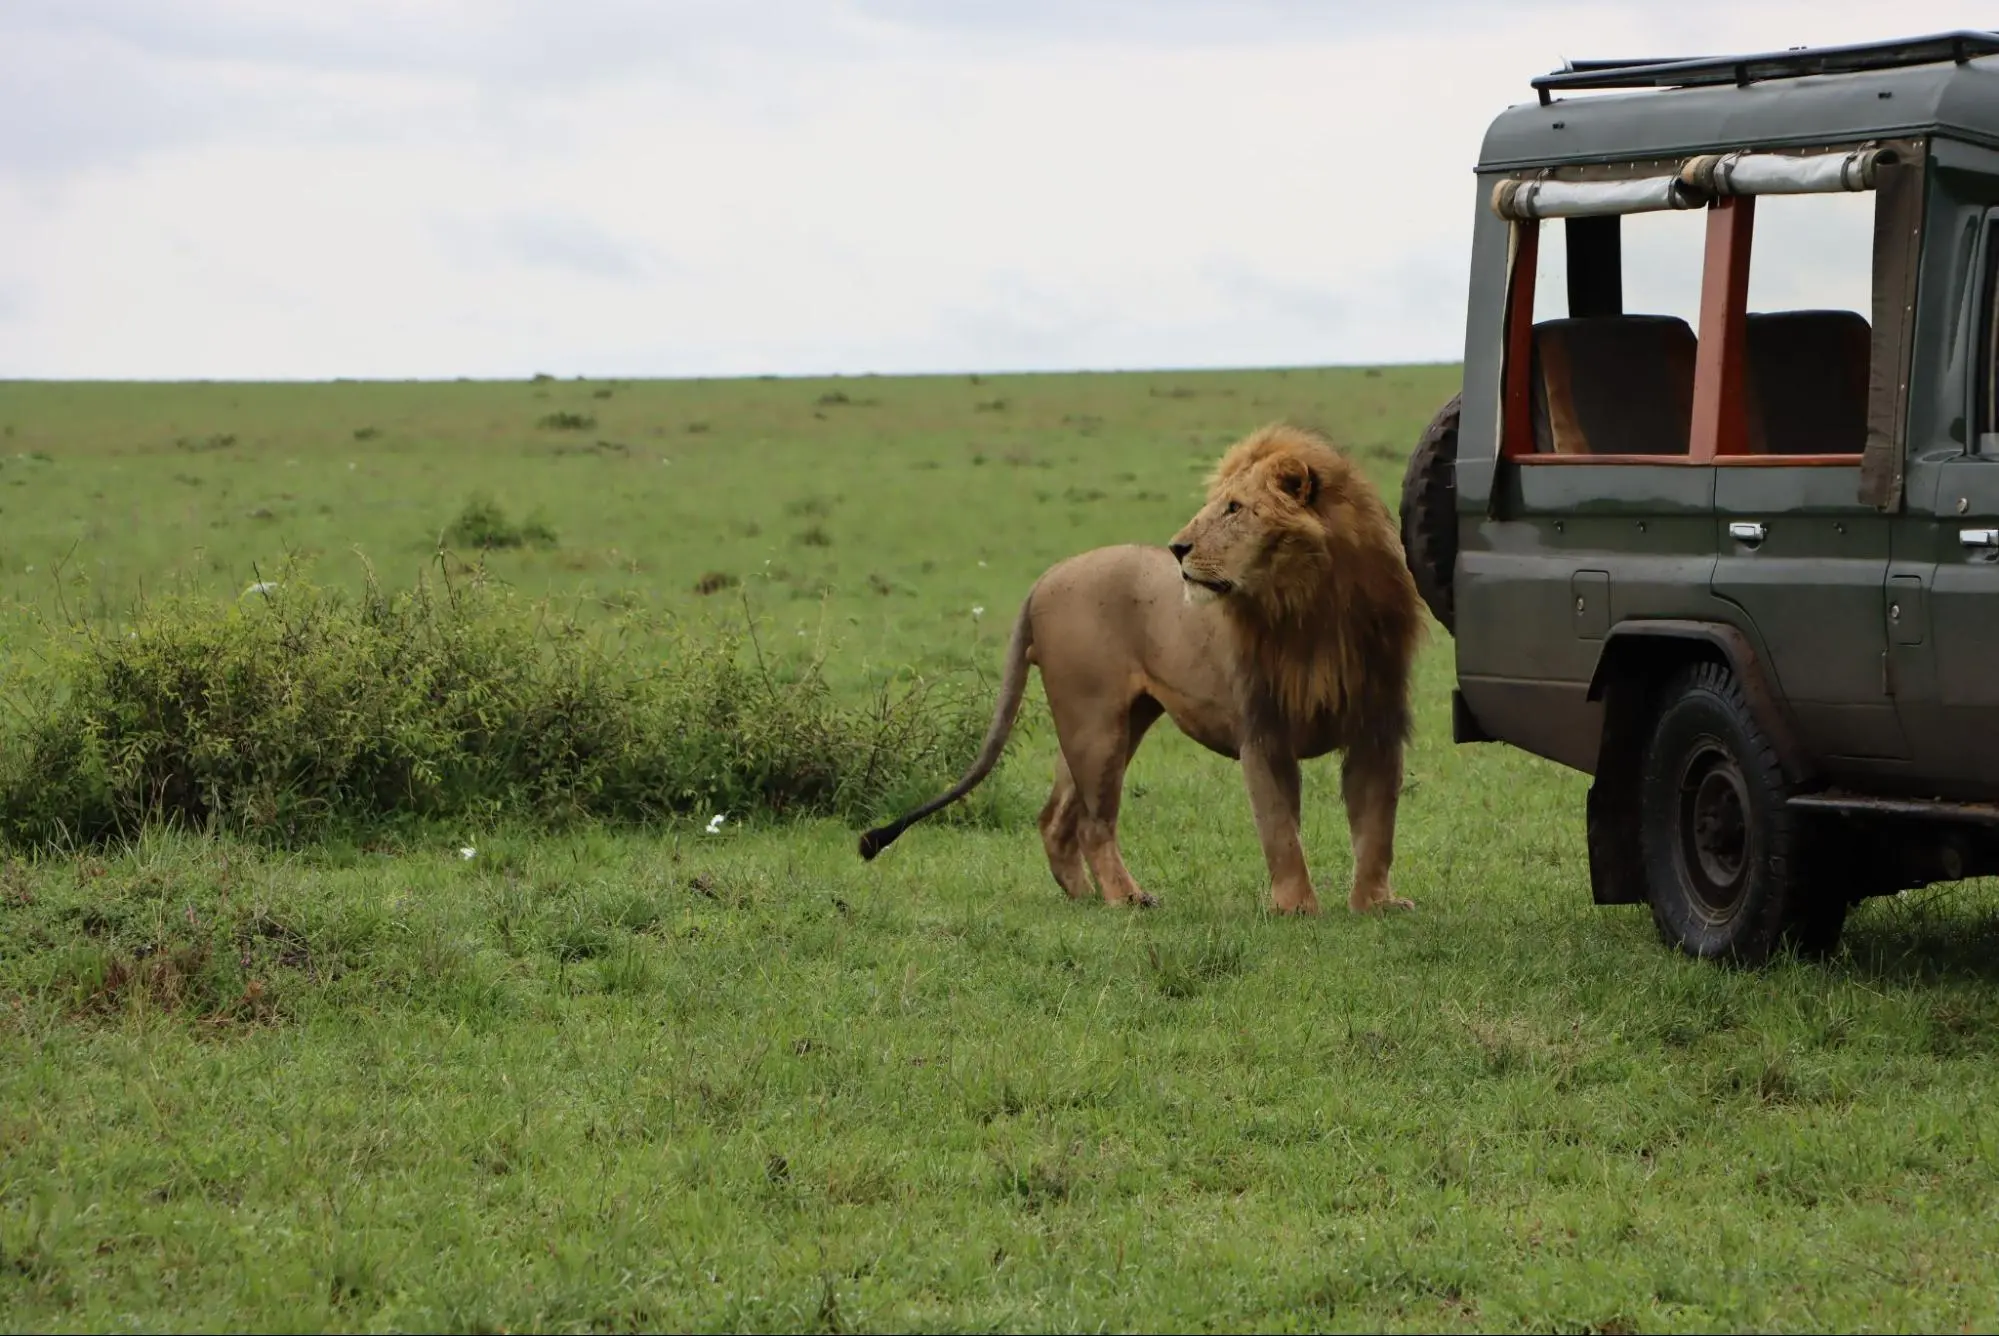 Kenya Safari rules: Lion at a Land Cruiser